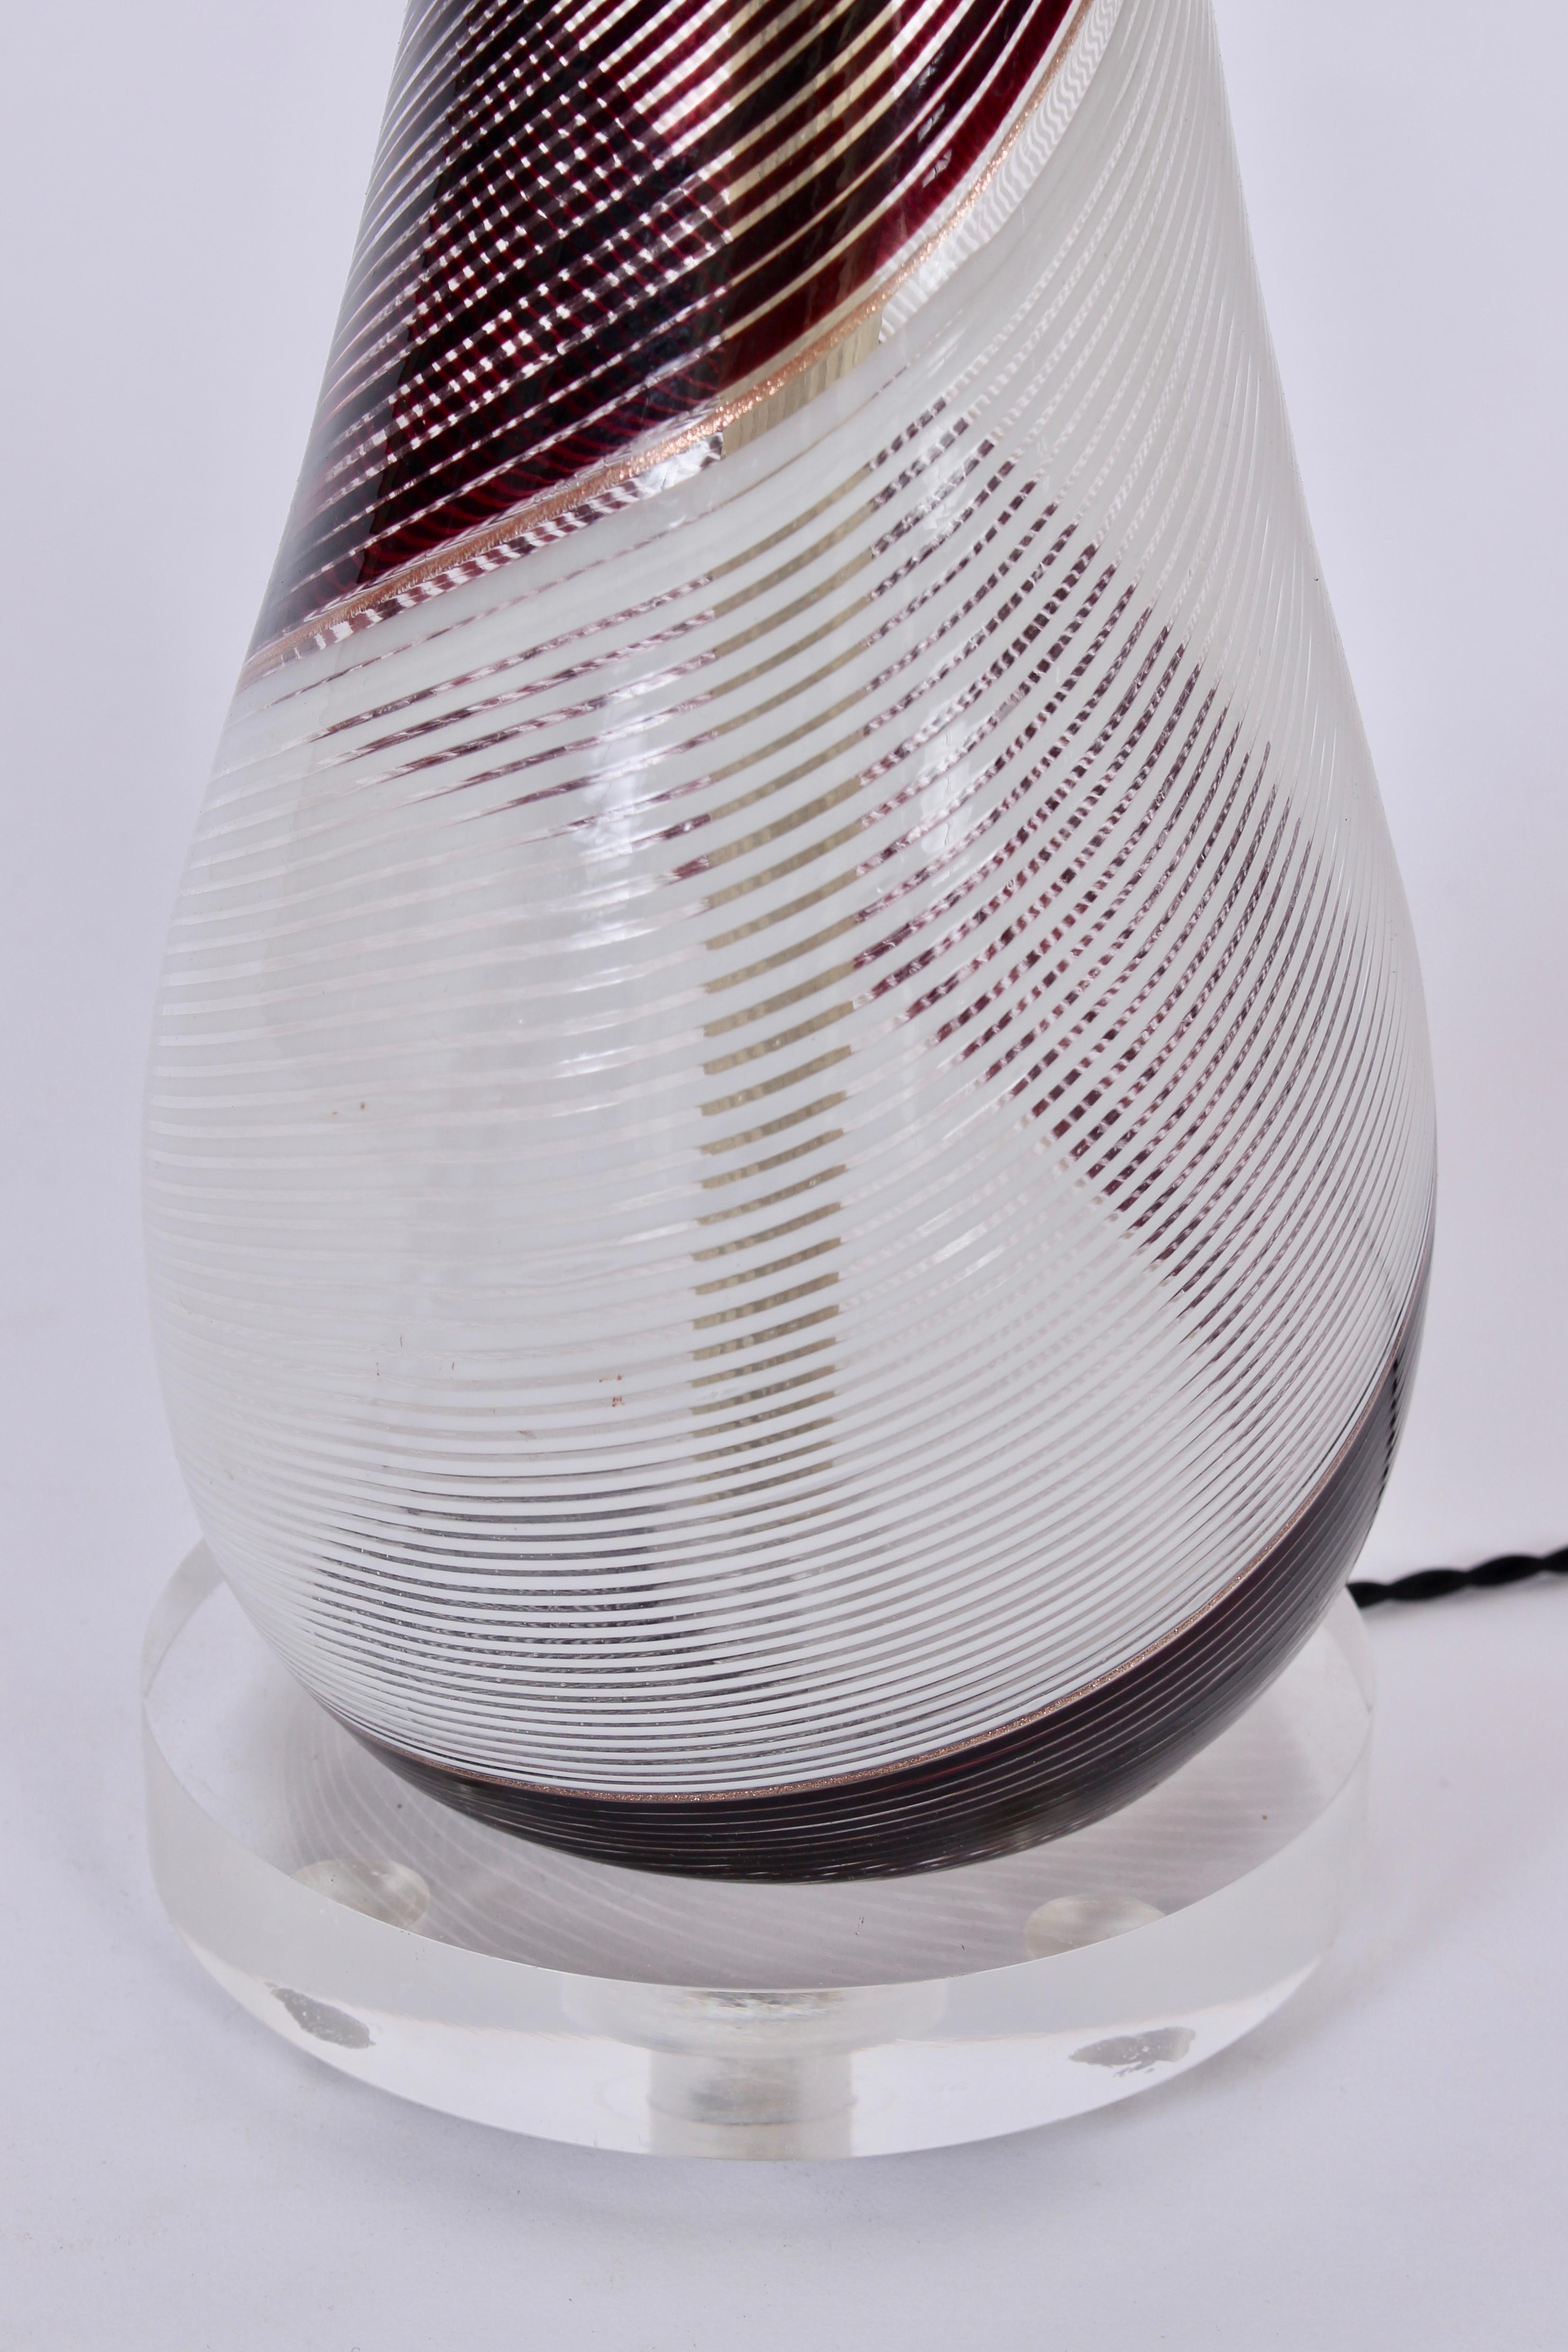 Dino Martens Mezza Filigrana Murano Glas Tischlampe in Schwarz, Weiß & Kupfer  (Muranoglas) im Angebot